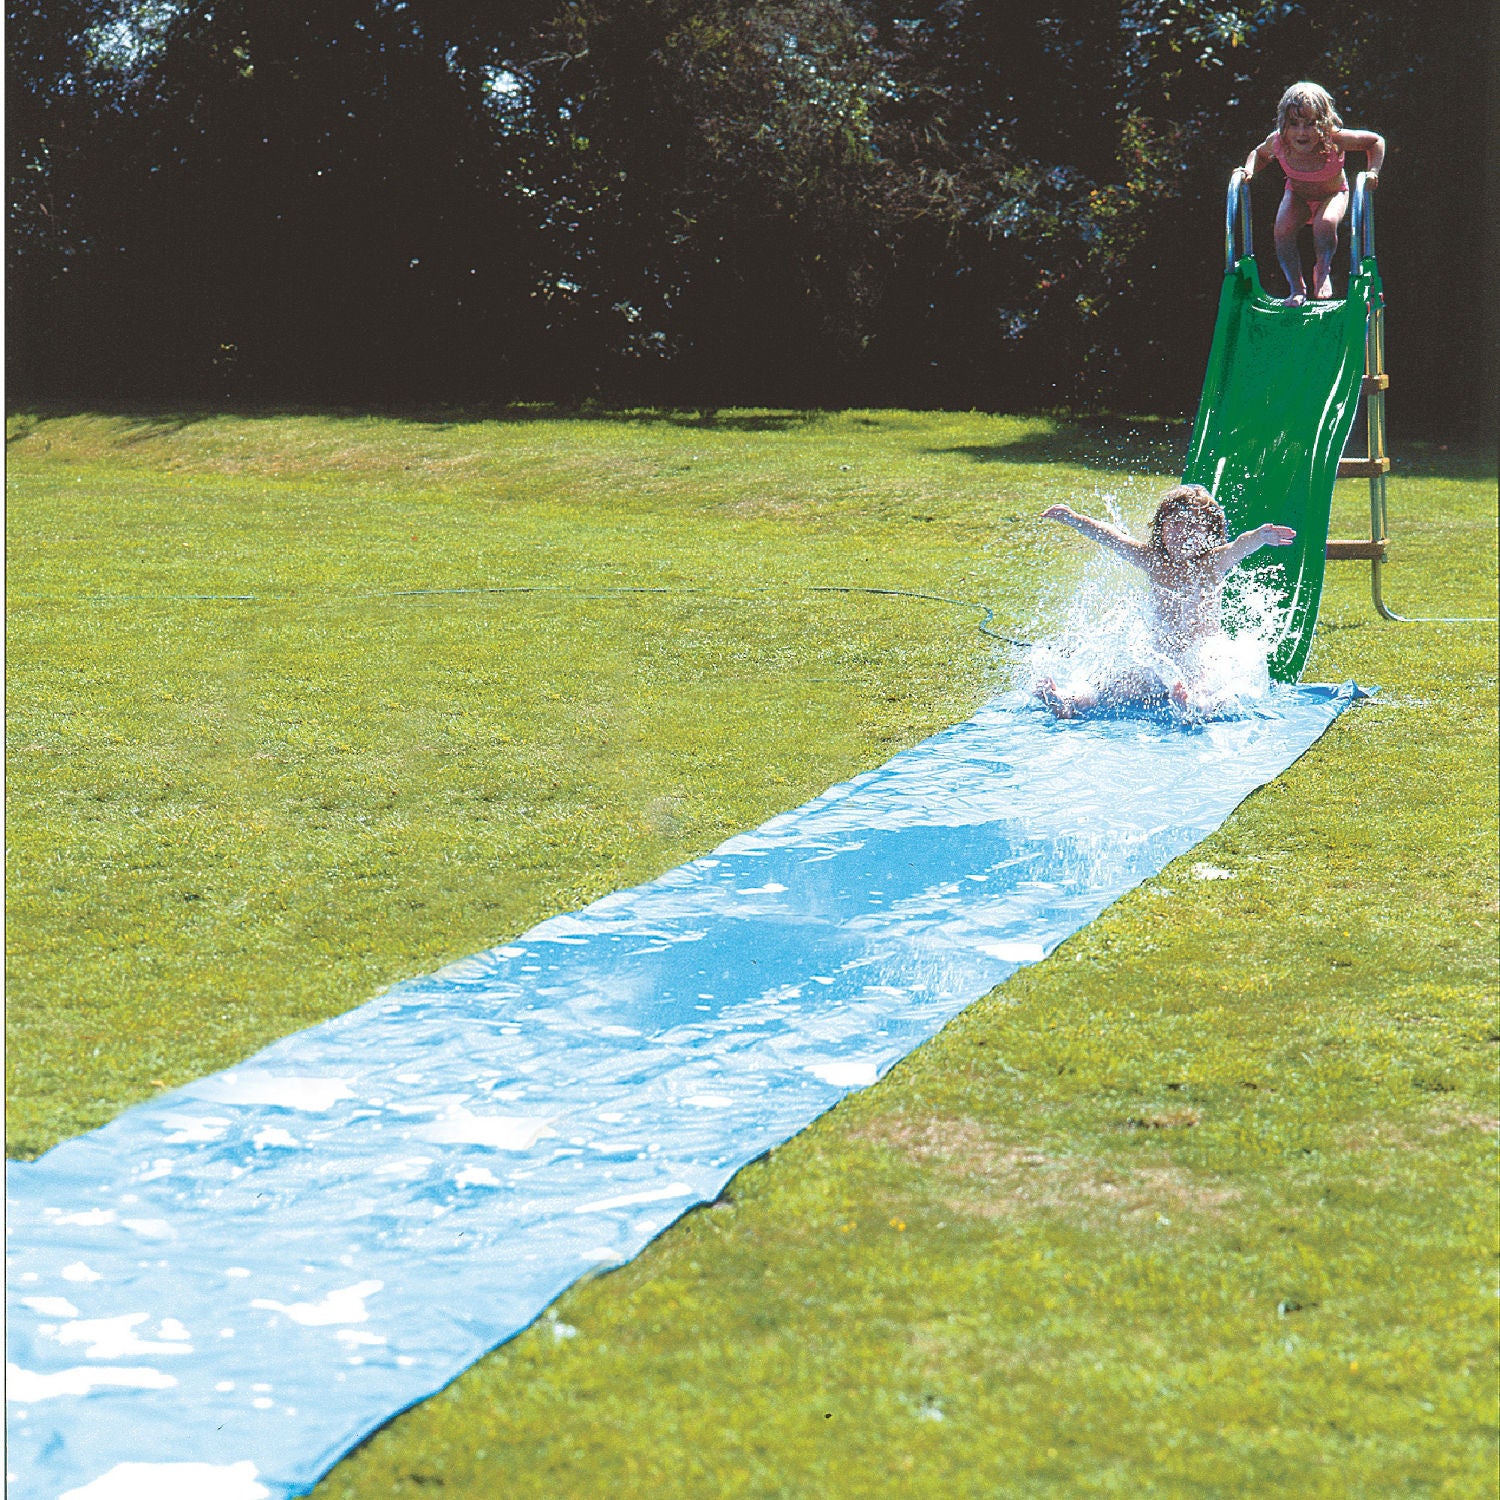 Water Slide 8m length - Just add water